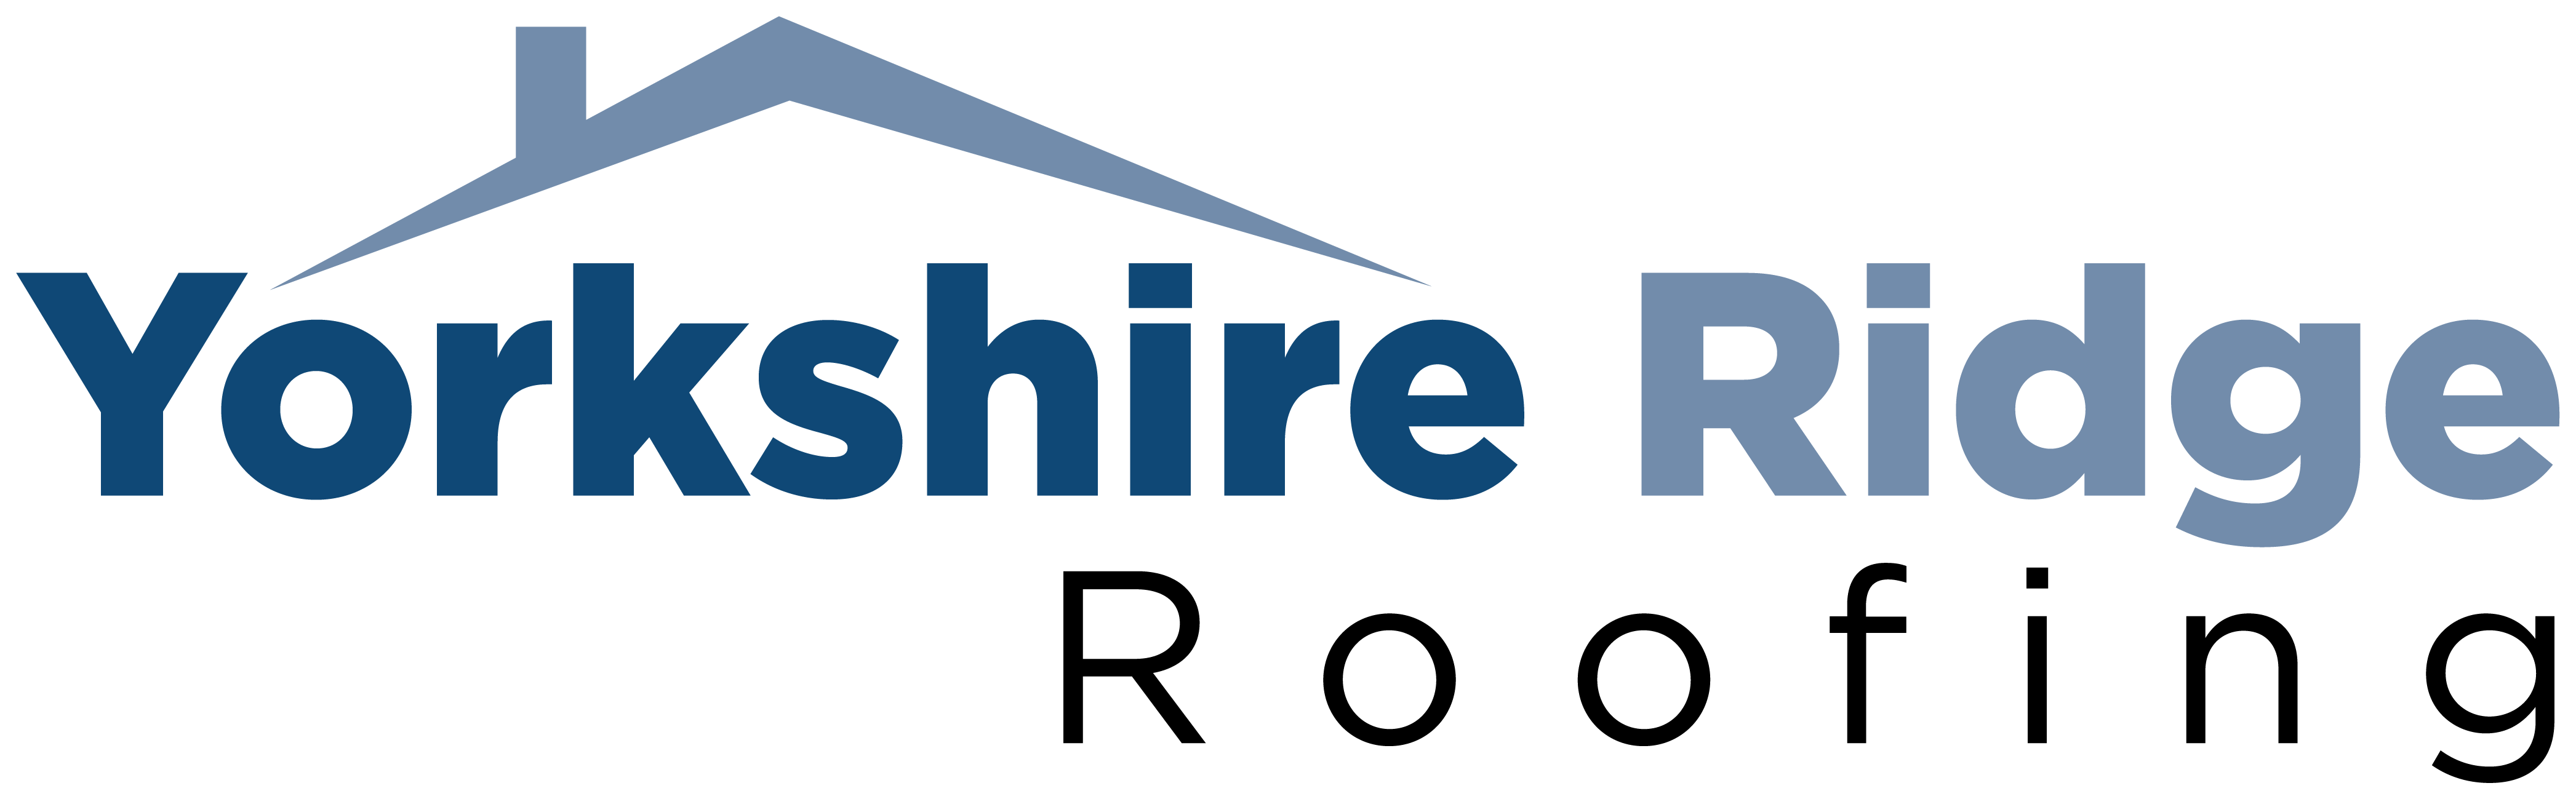 Yorkshire Ridge Roofing logo